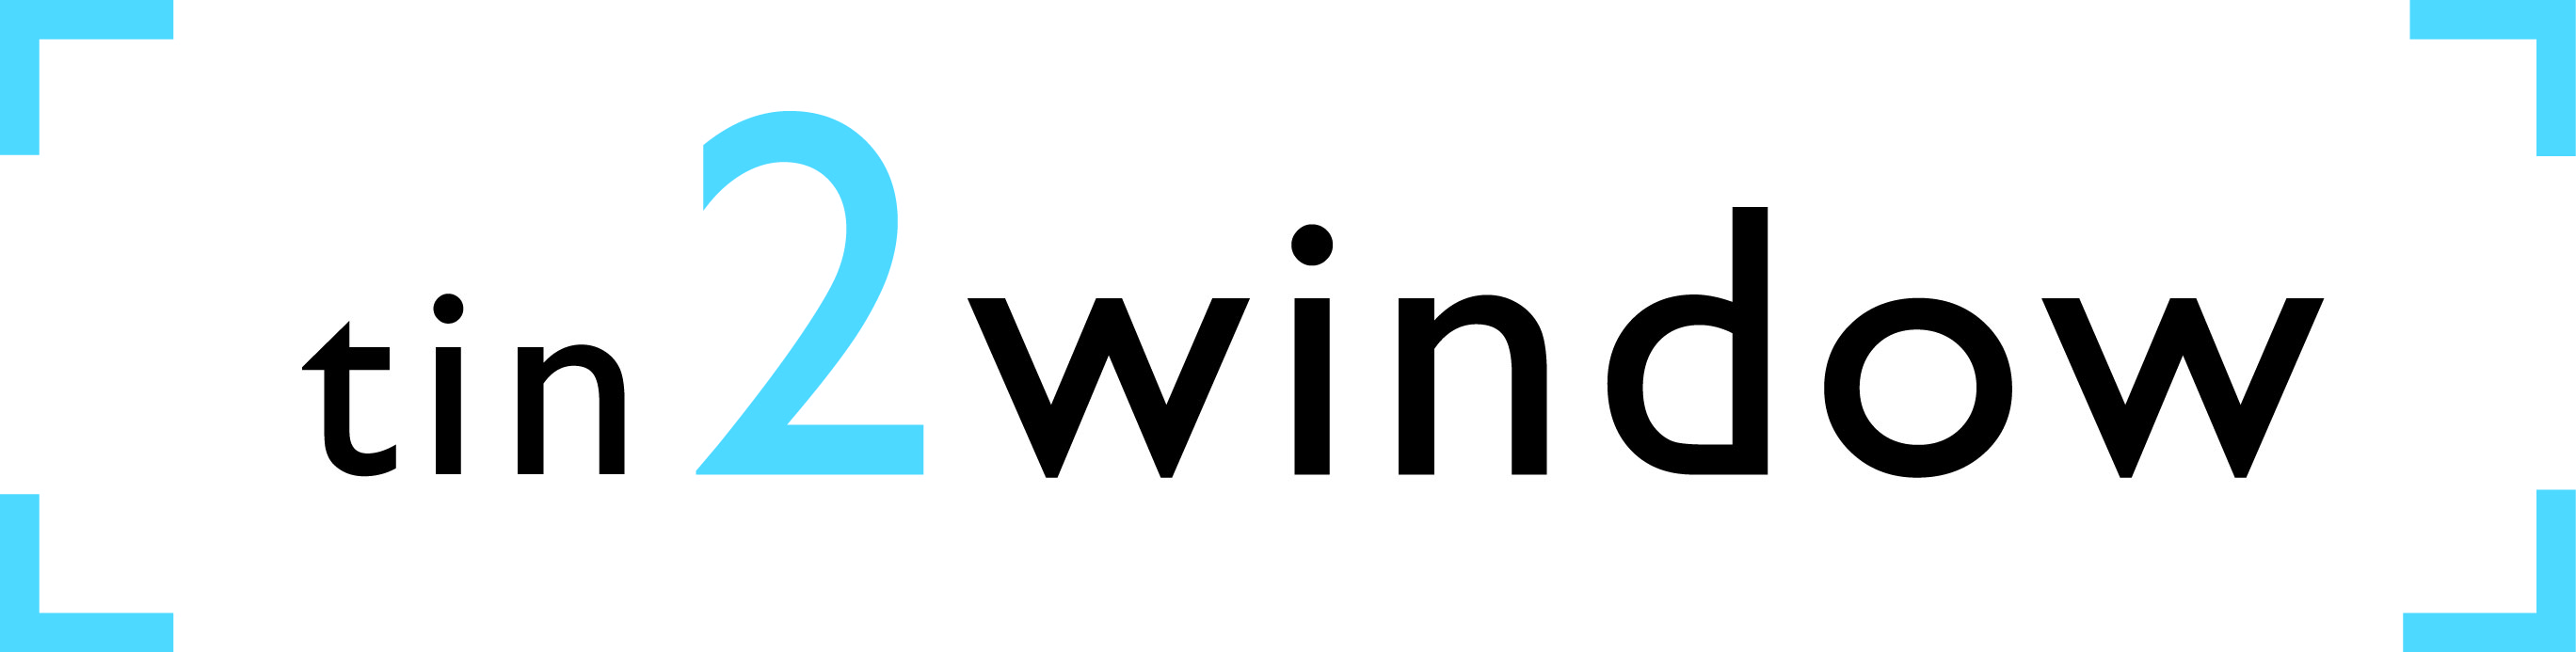 tin2window